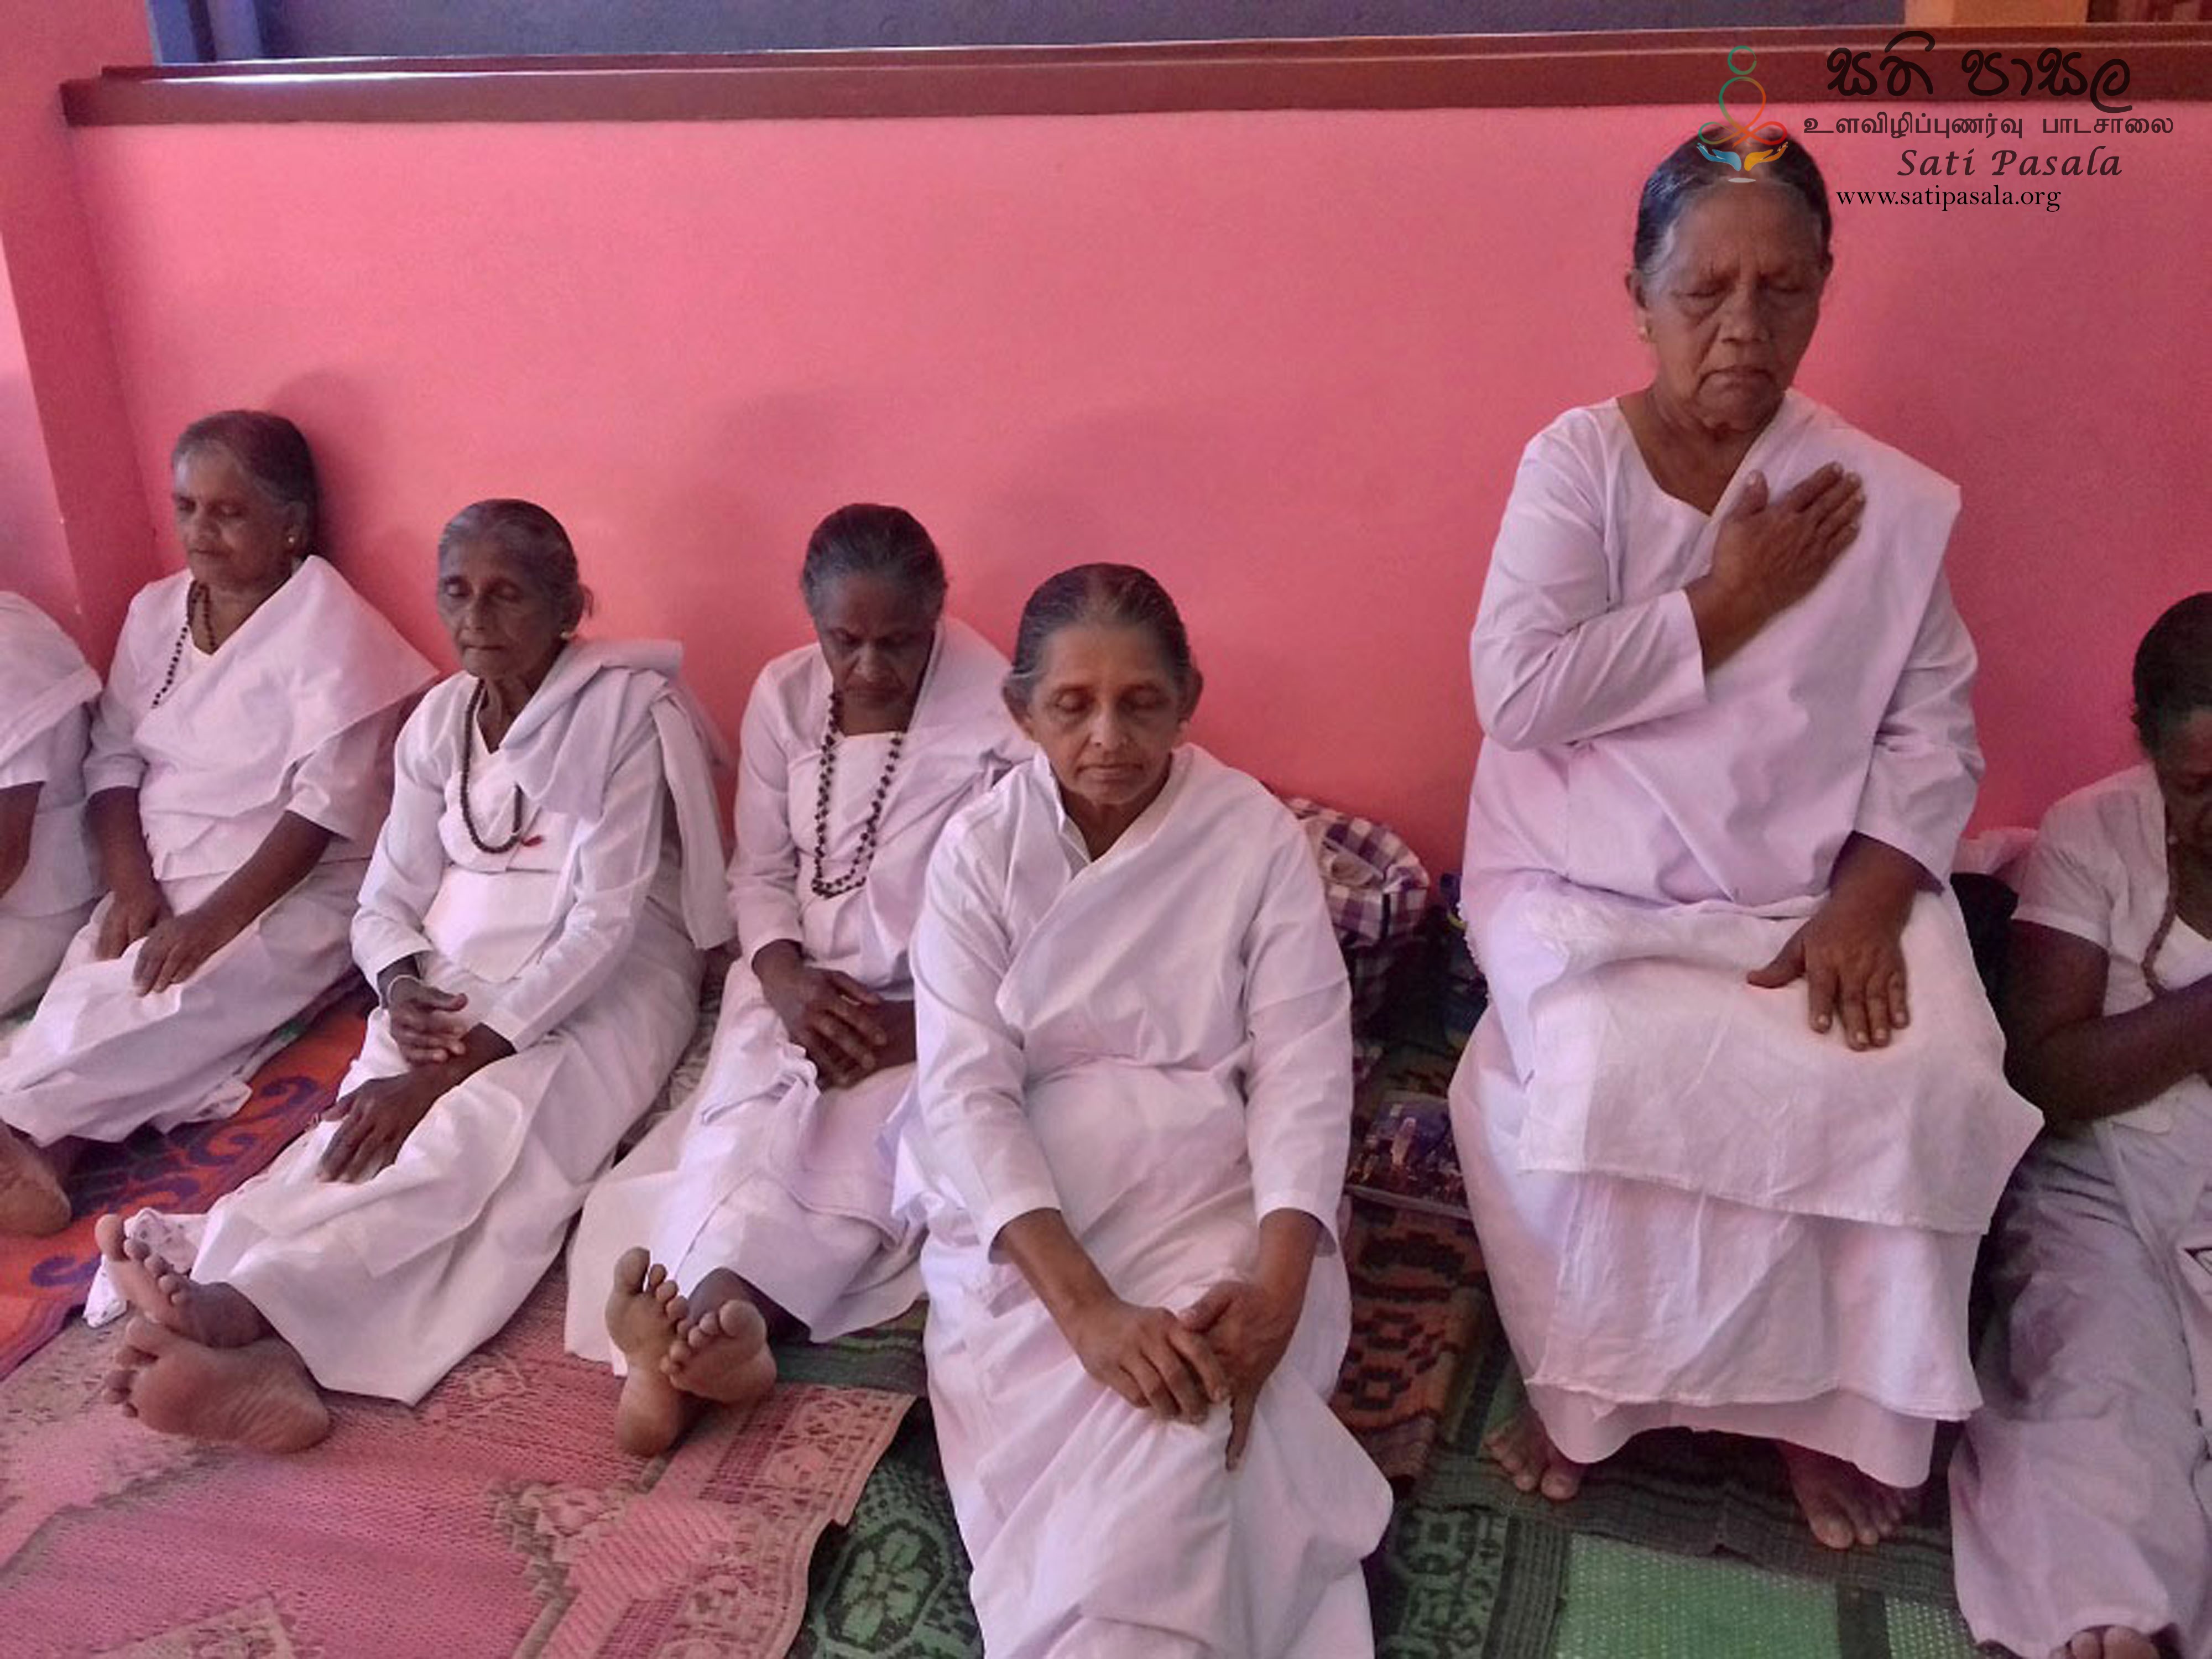 Sati Pasala programme at Sri Sugatha Bimbaramaya, Wathuliyadda, Uduwela